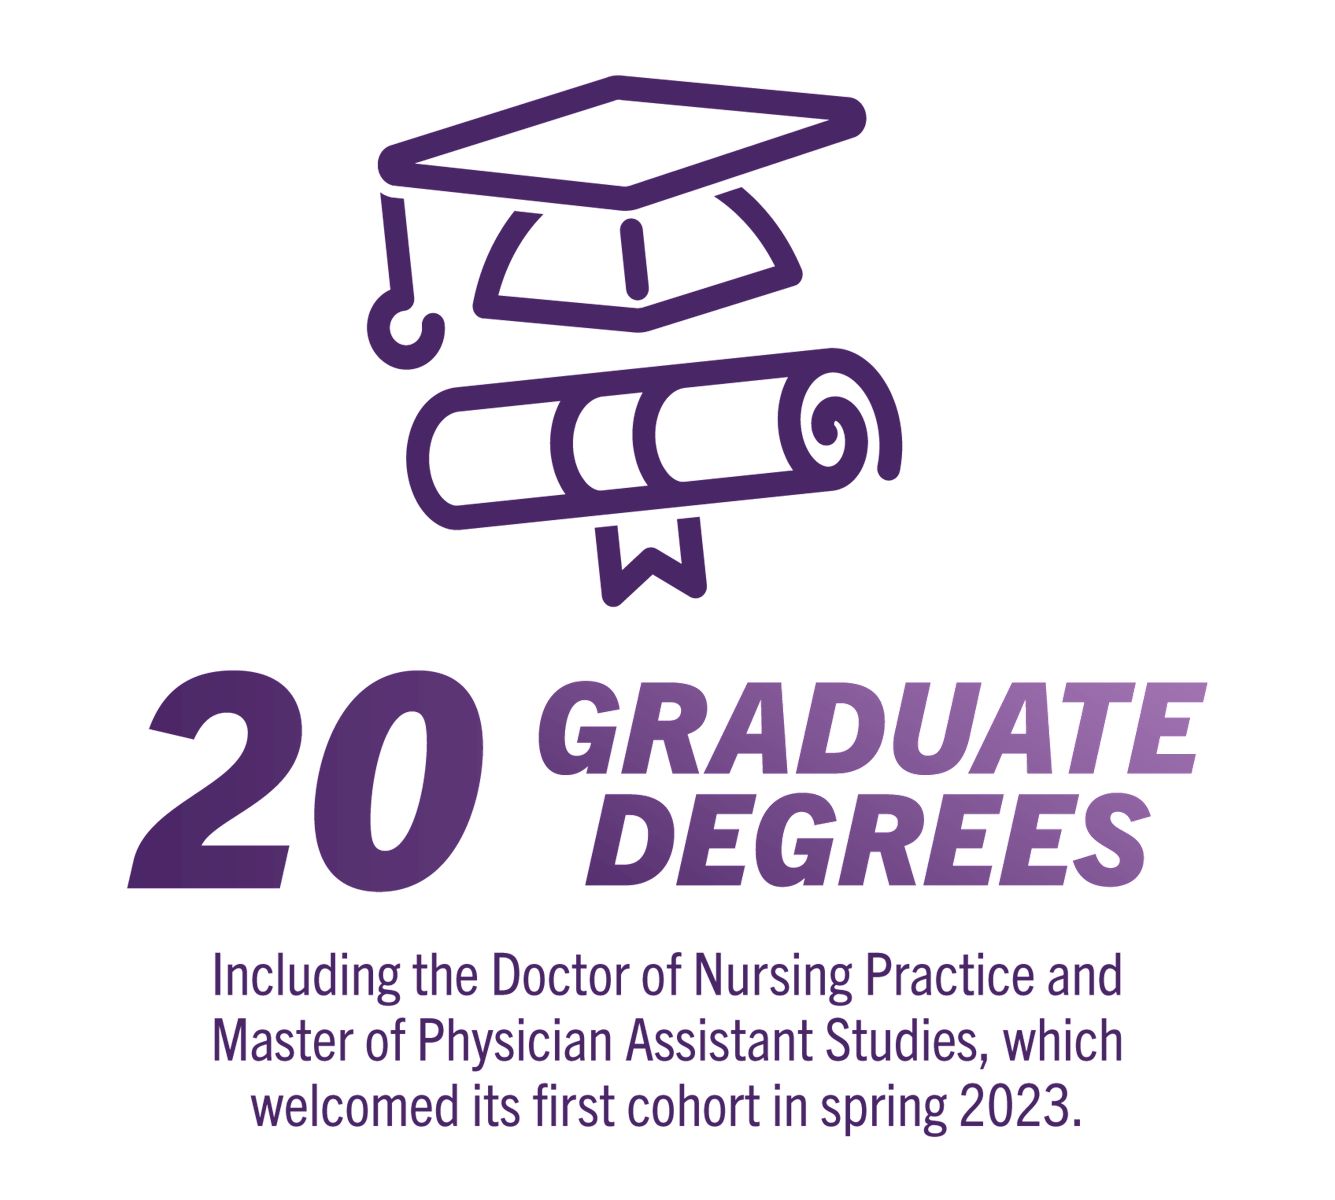 WSU has 20 graduate degree programs.